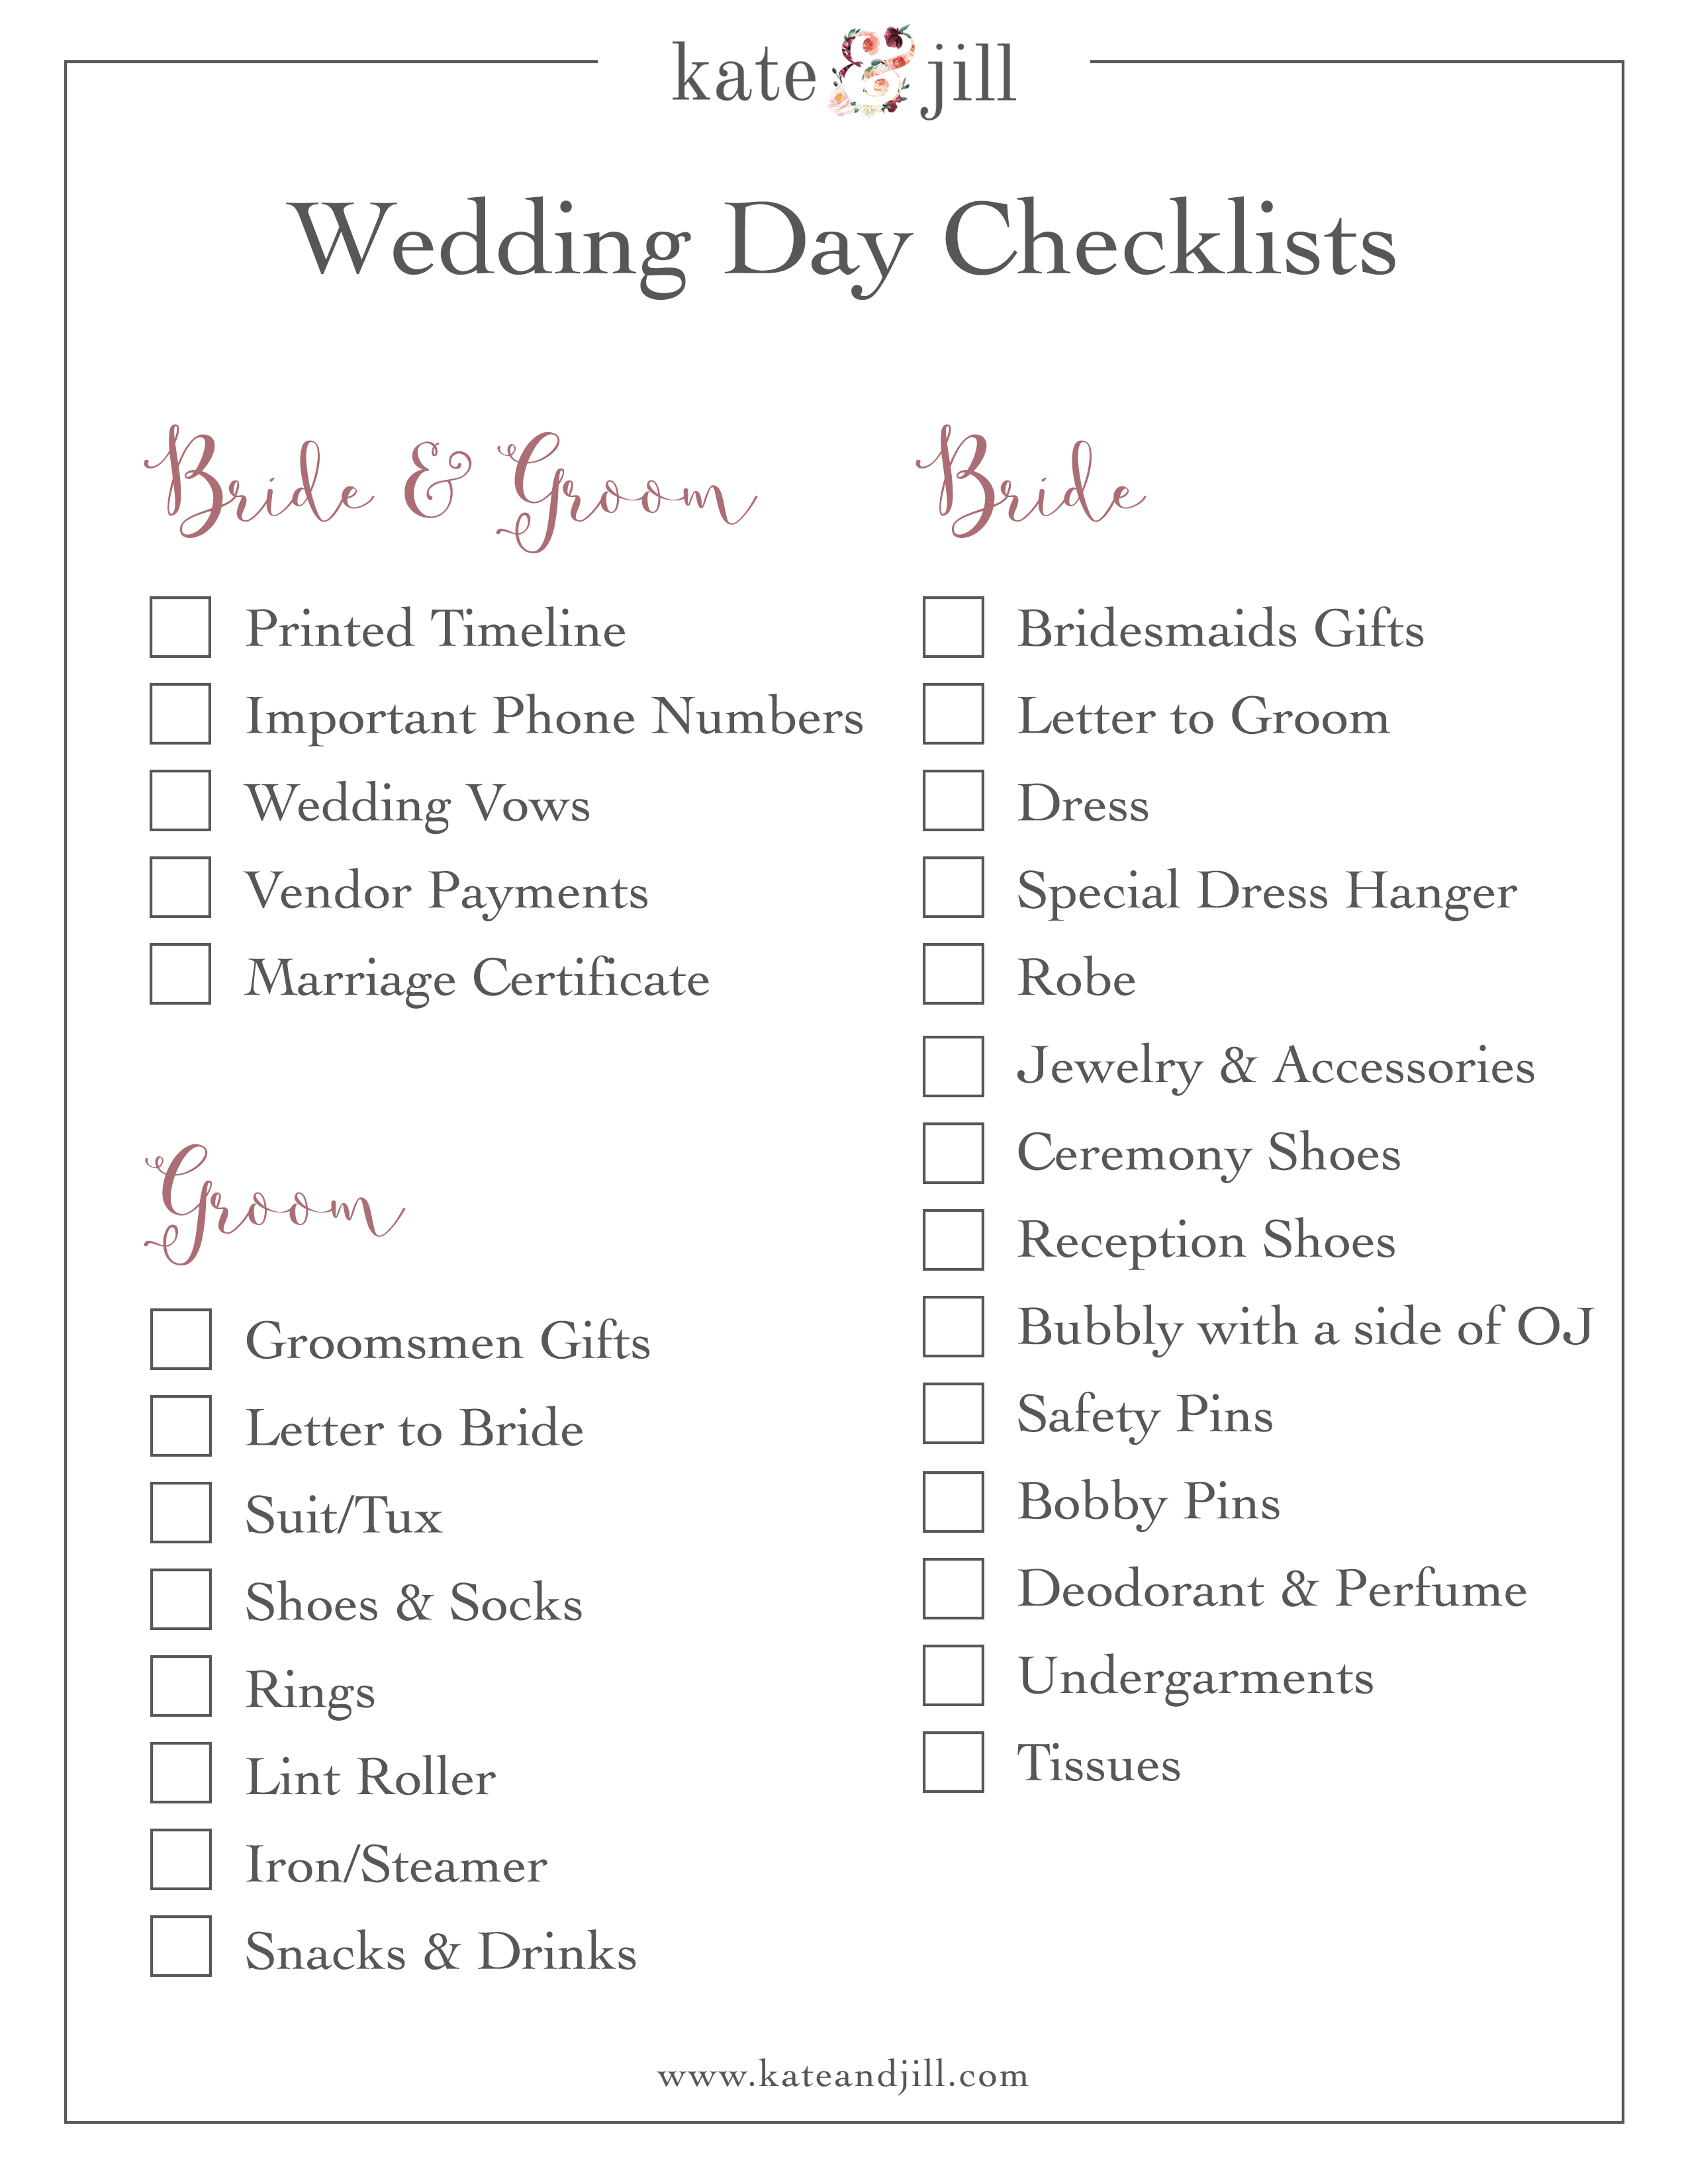 wedding-day-checklists-kate-jill